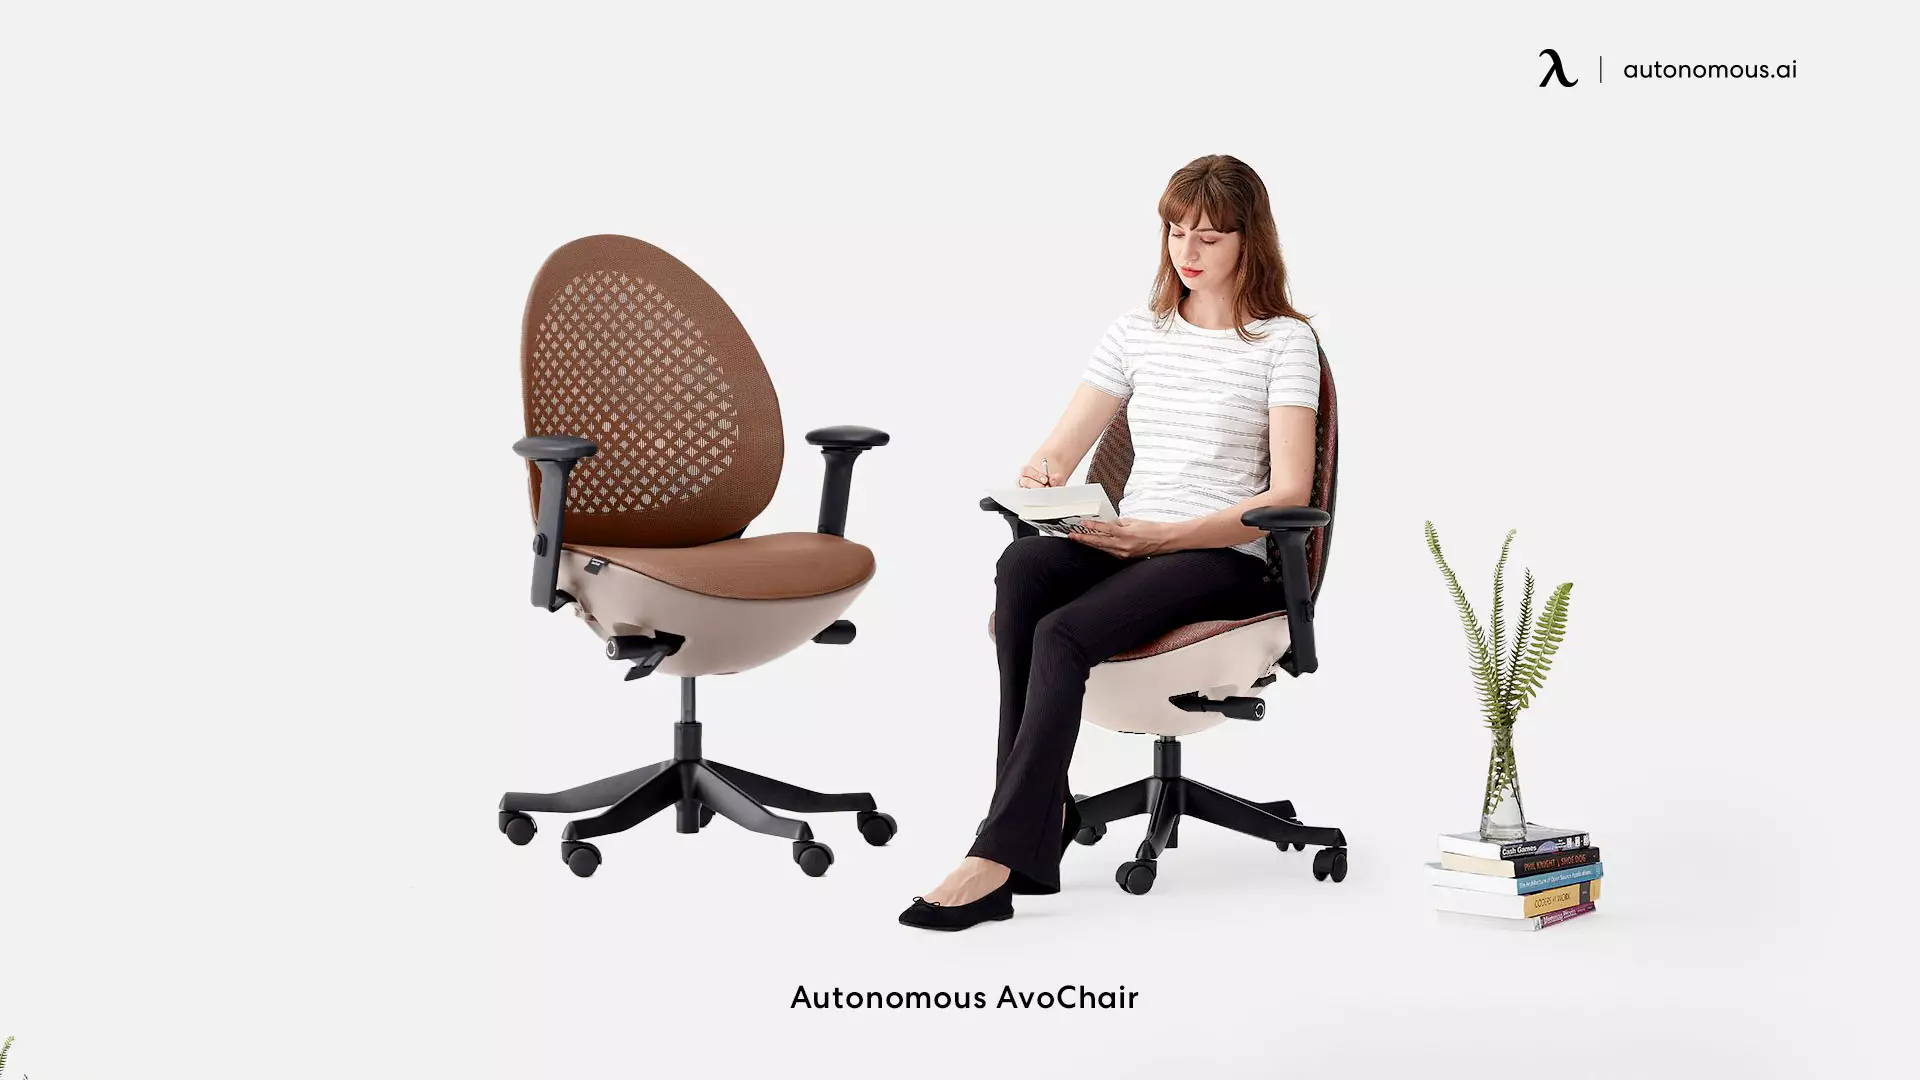 Autonomous AvoChair dorm chair